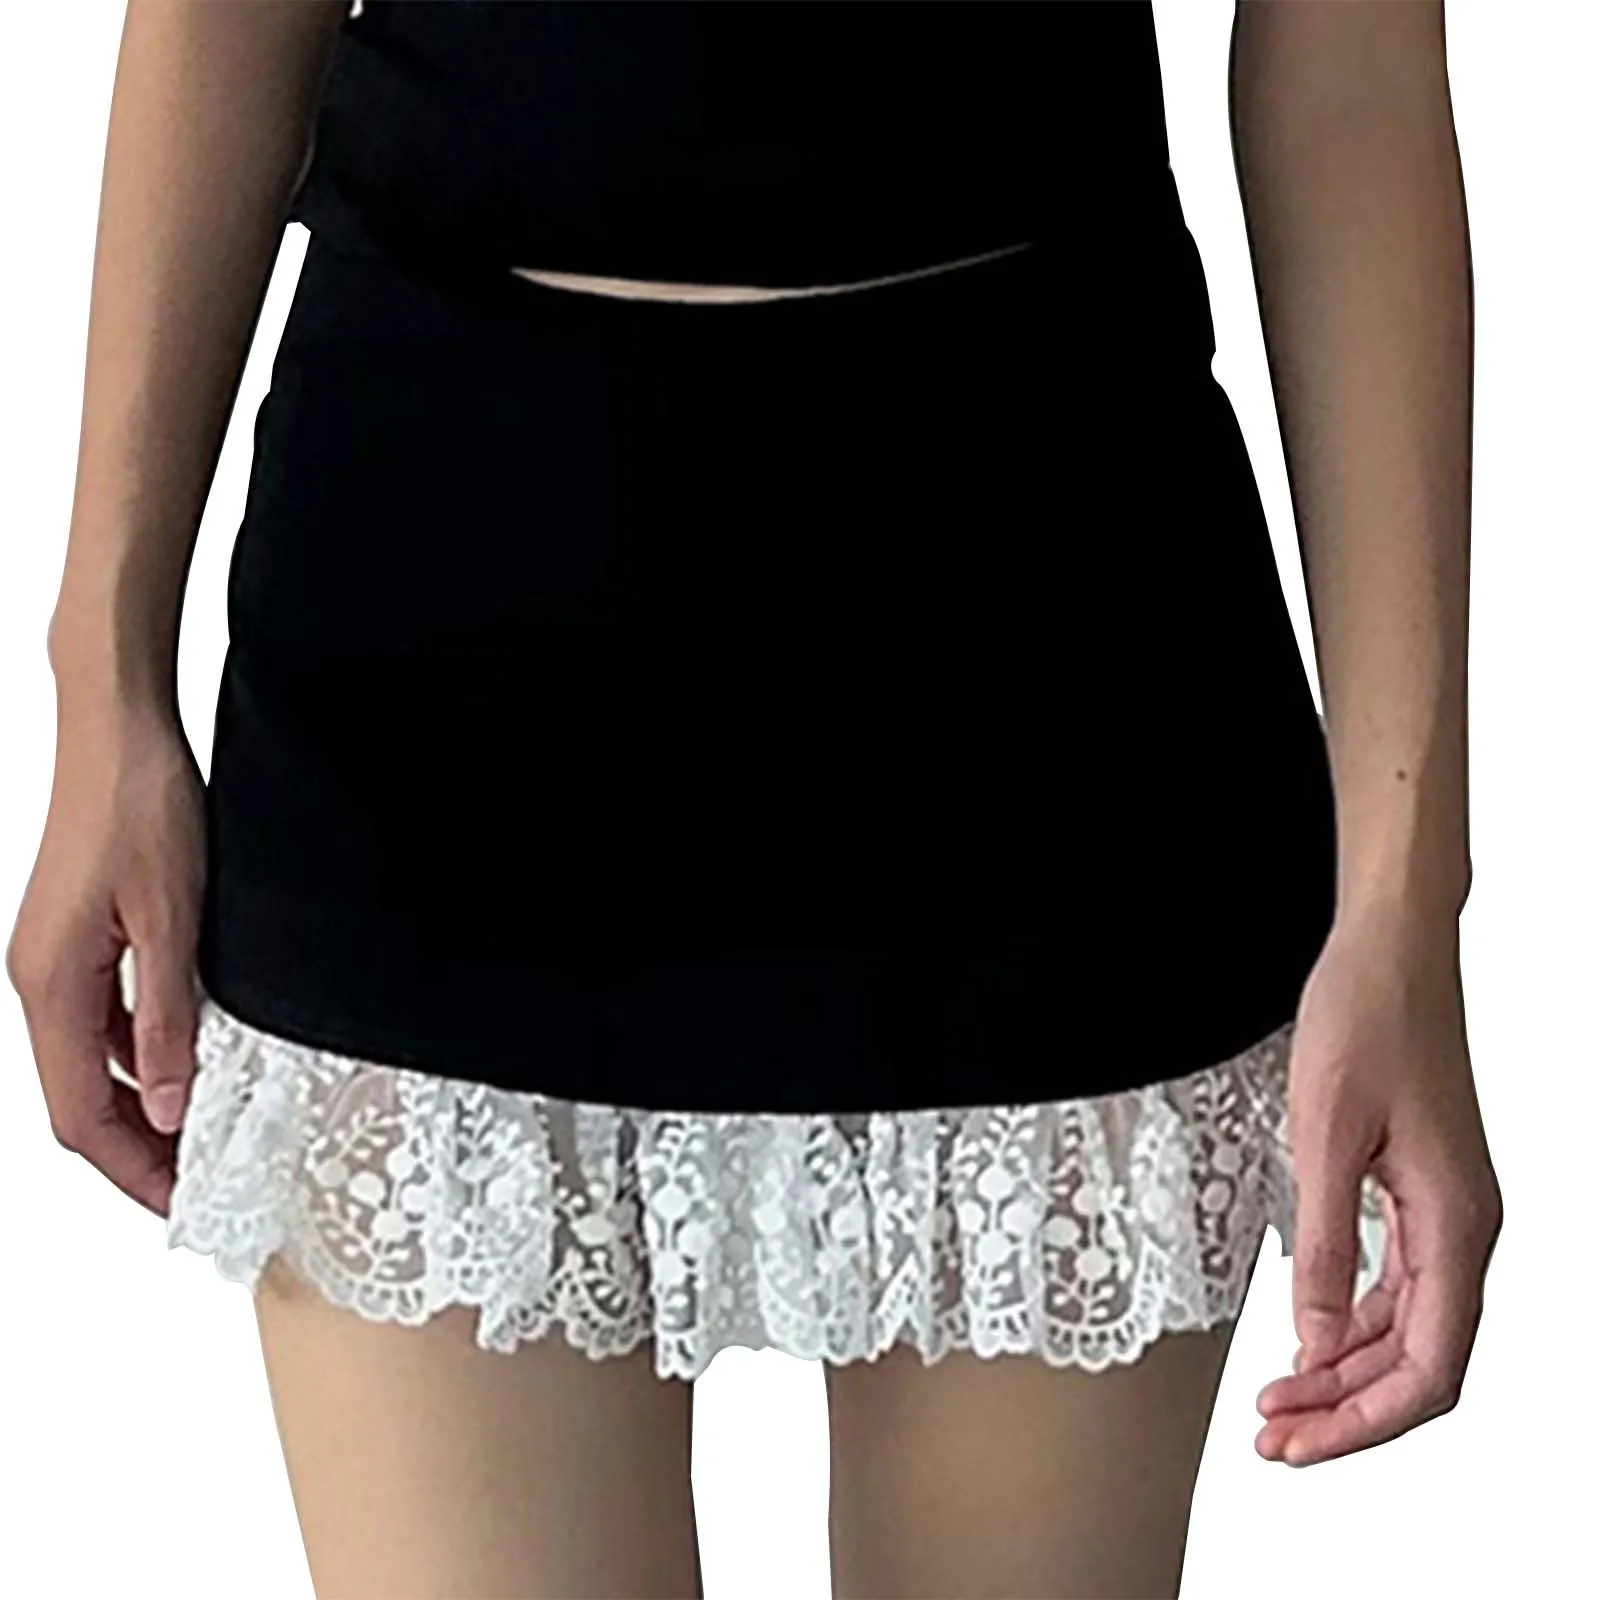 

High Waisted Skirt Women's Trendy Lace Patchwork Black Skirt Crochet Embroidery Layered Design Peplum Skirts Casual Daily Wear